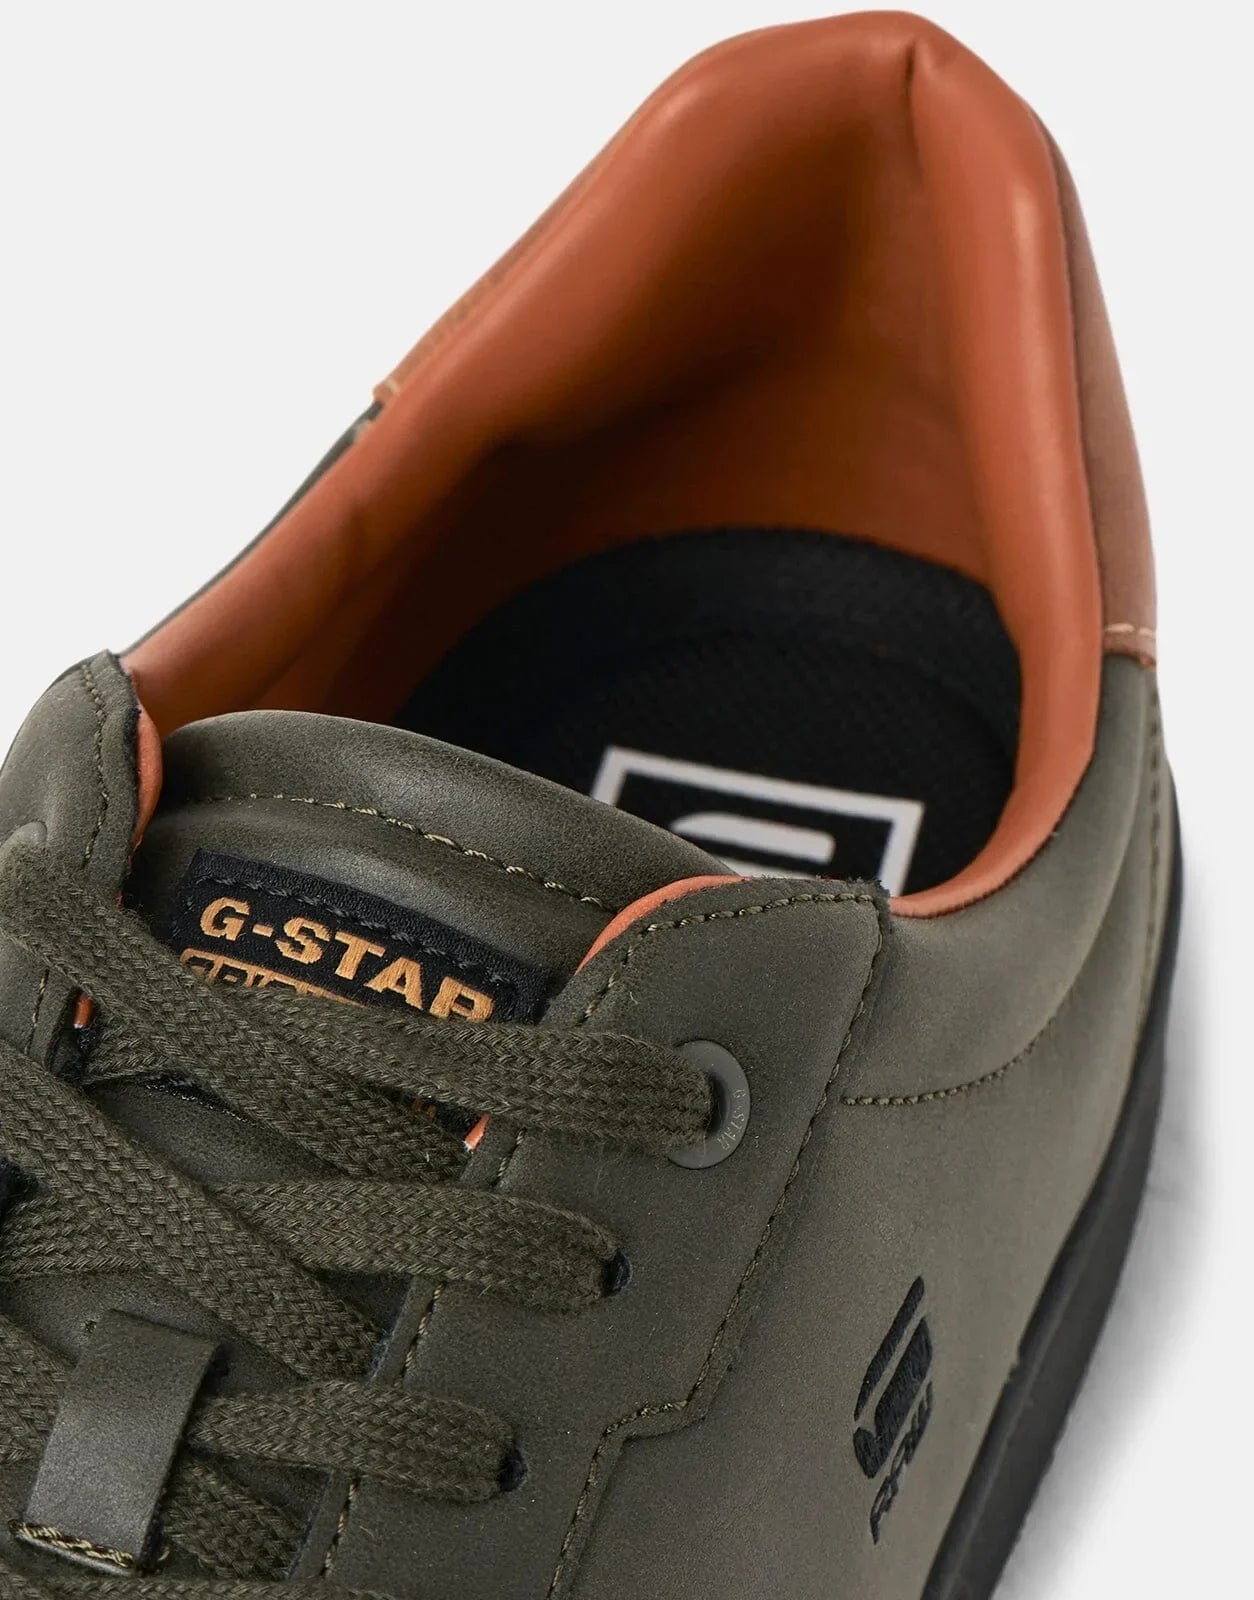 G-Star RAW Cadet Bo Sneaker